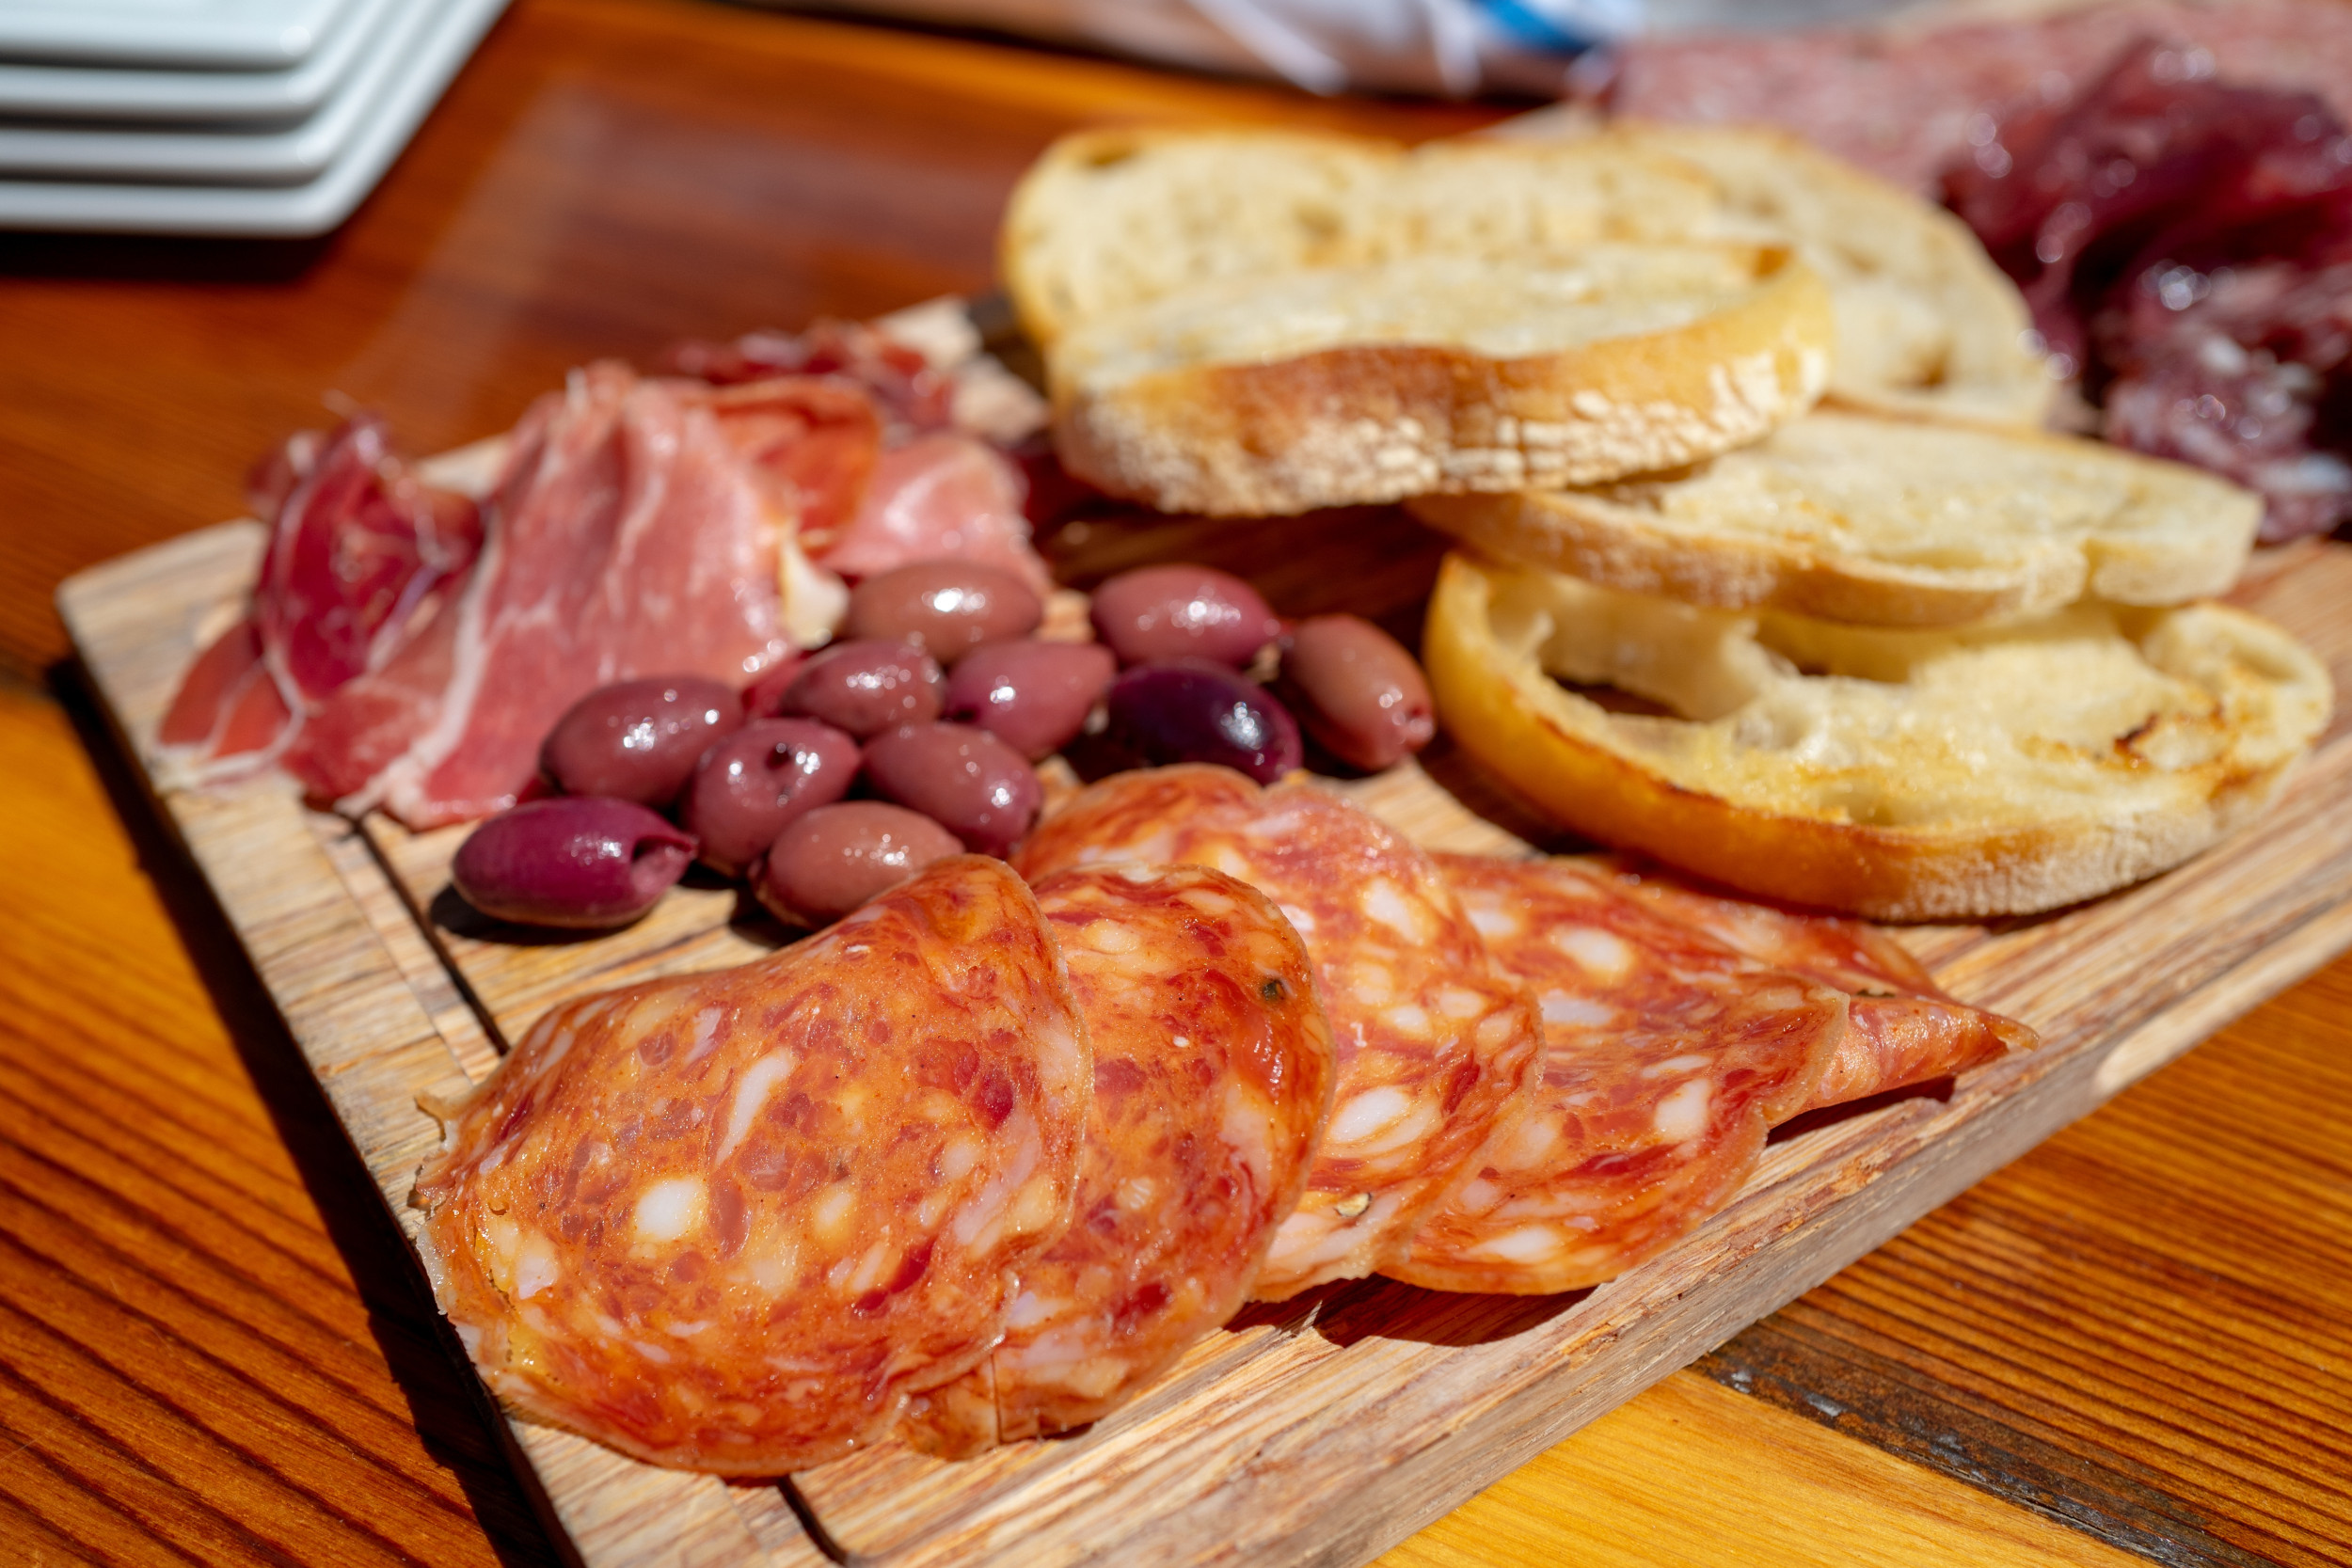 ham, pork recall as nationwide warning issued over salmonella illness